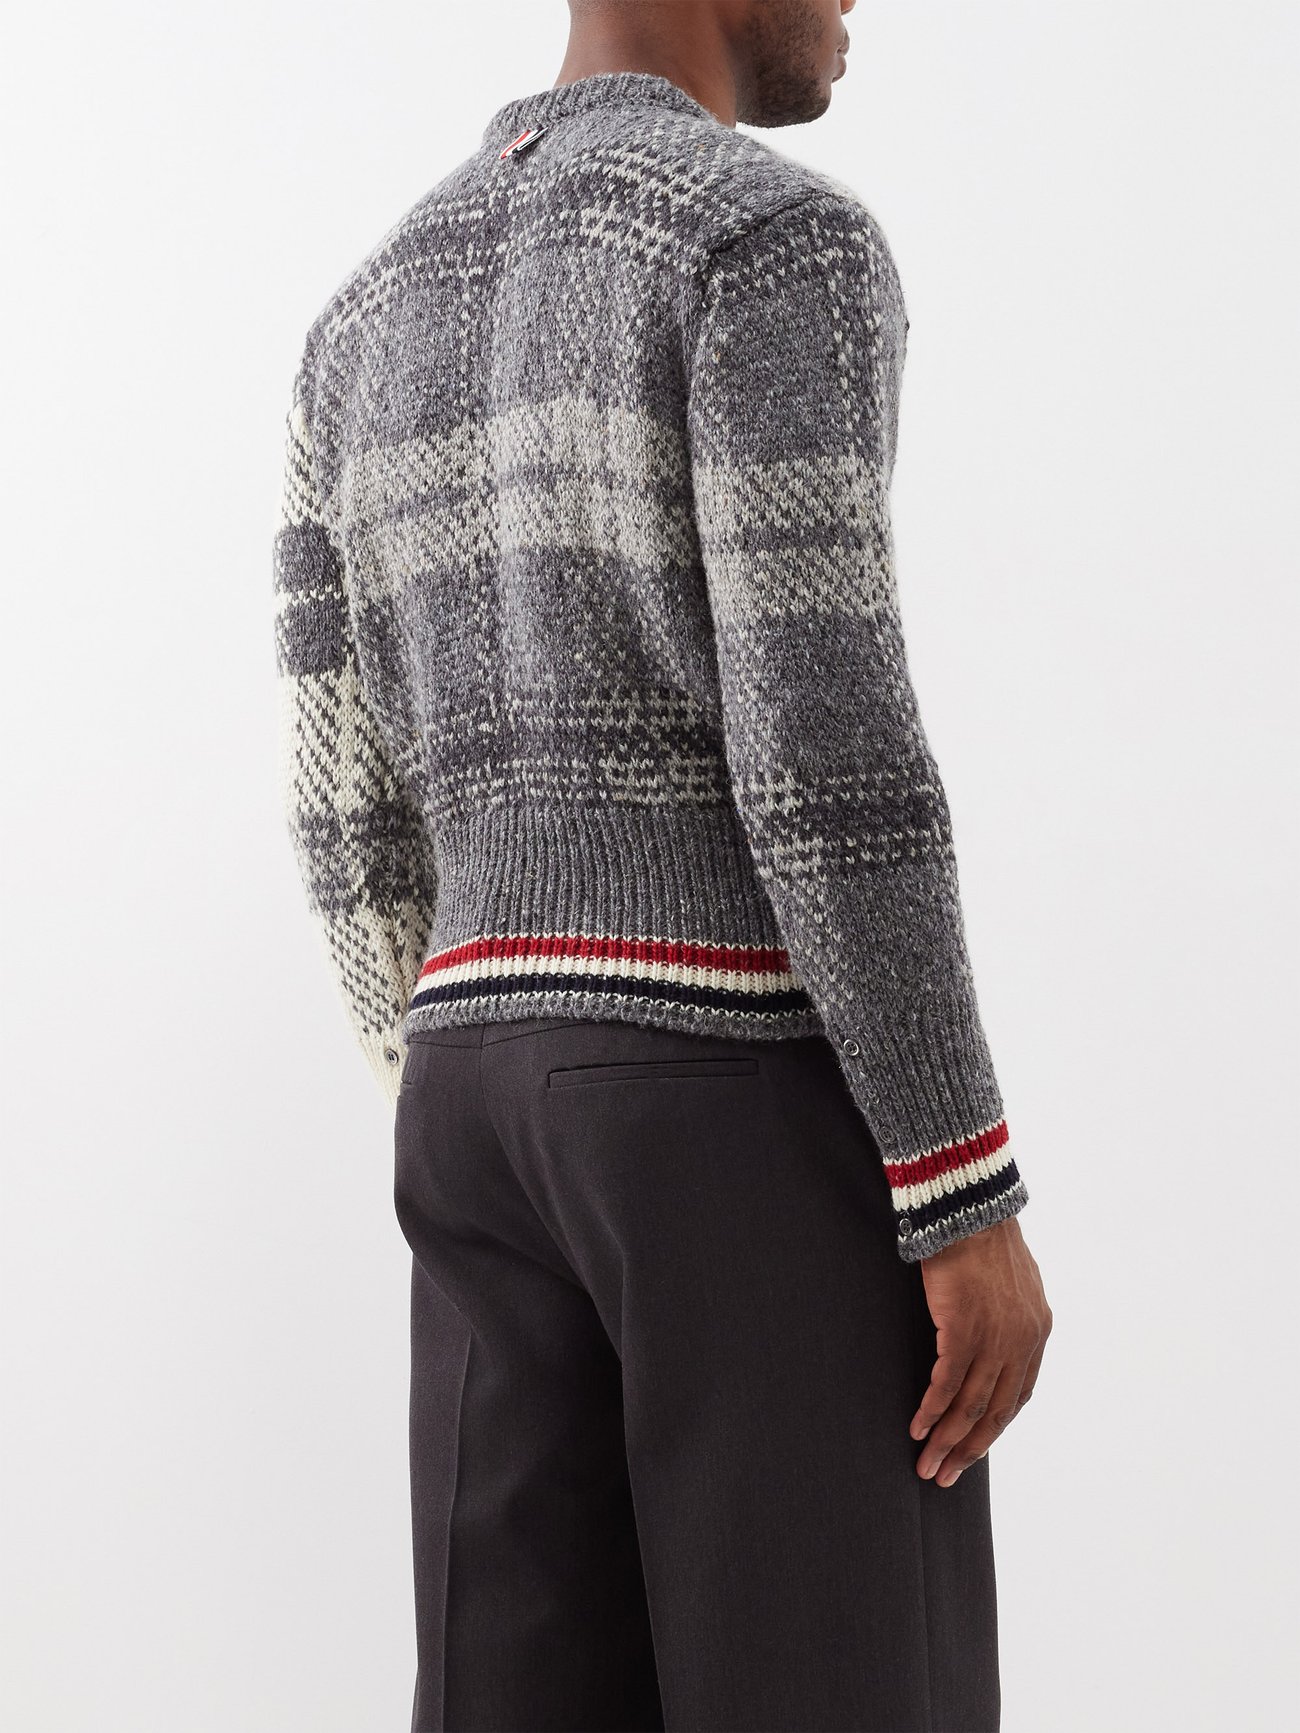 Lardini Gray and Black Jacquard Knit Crew Neck Sweater